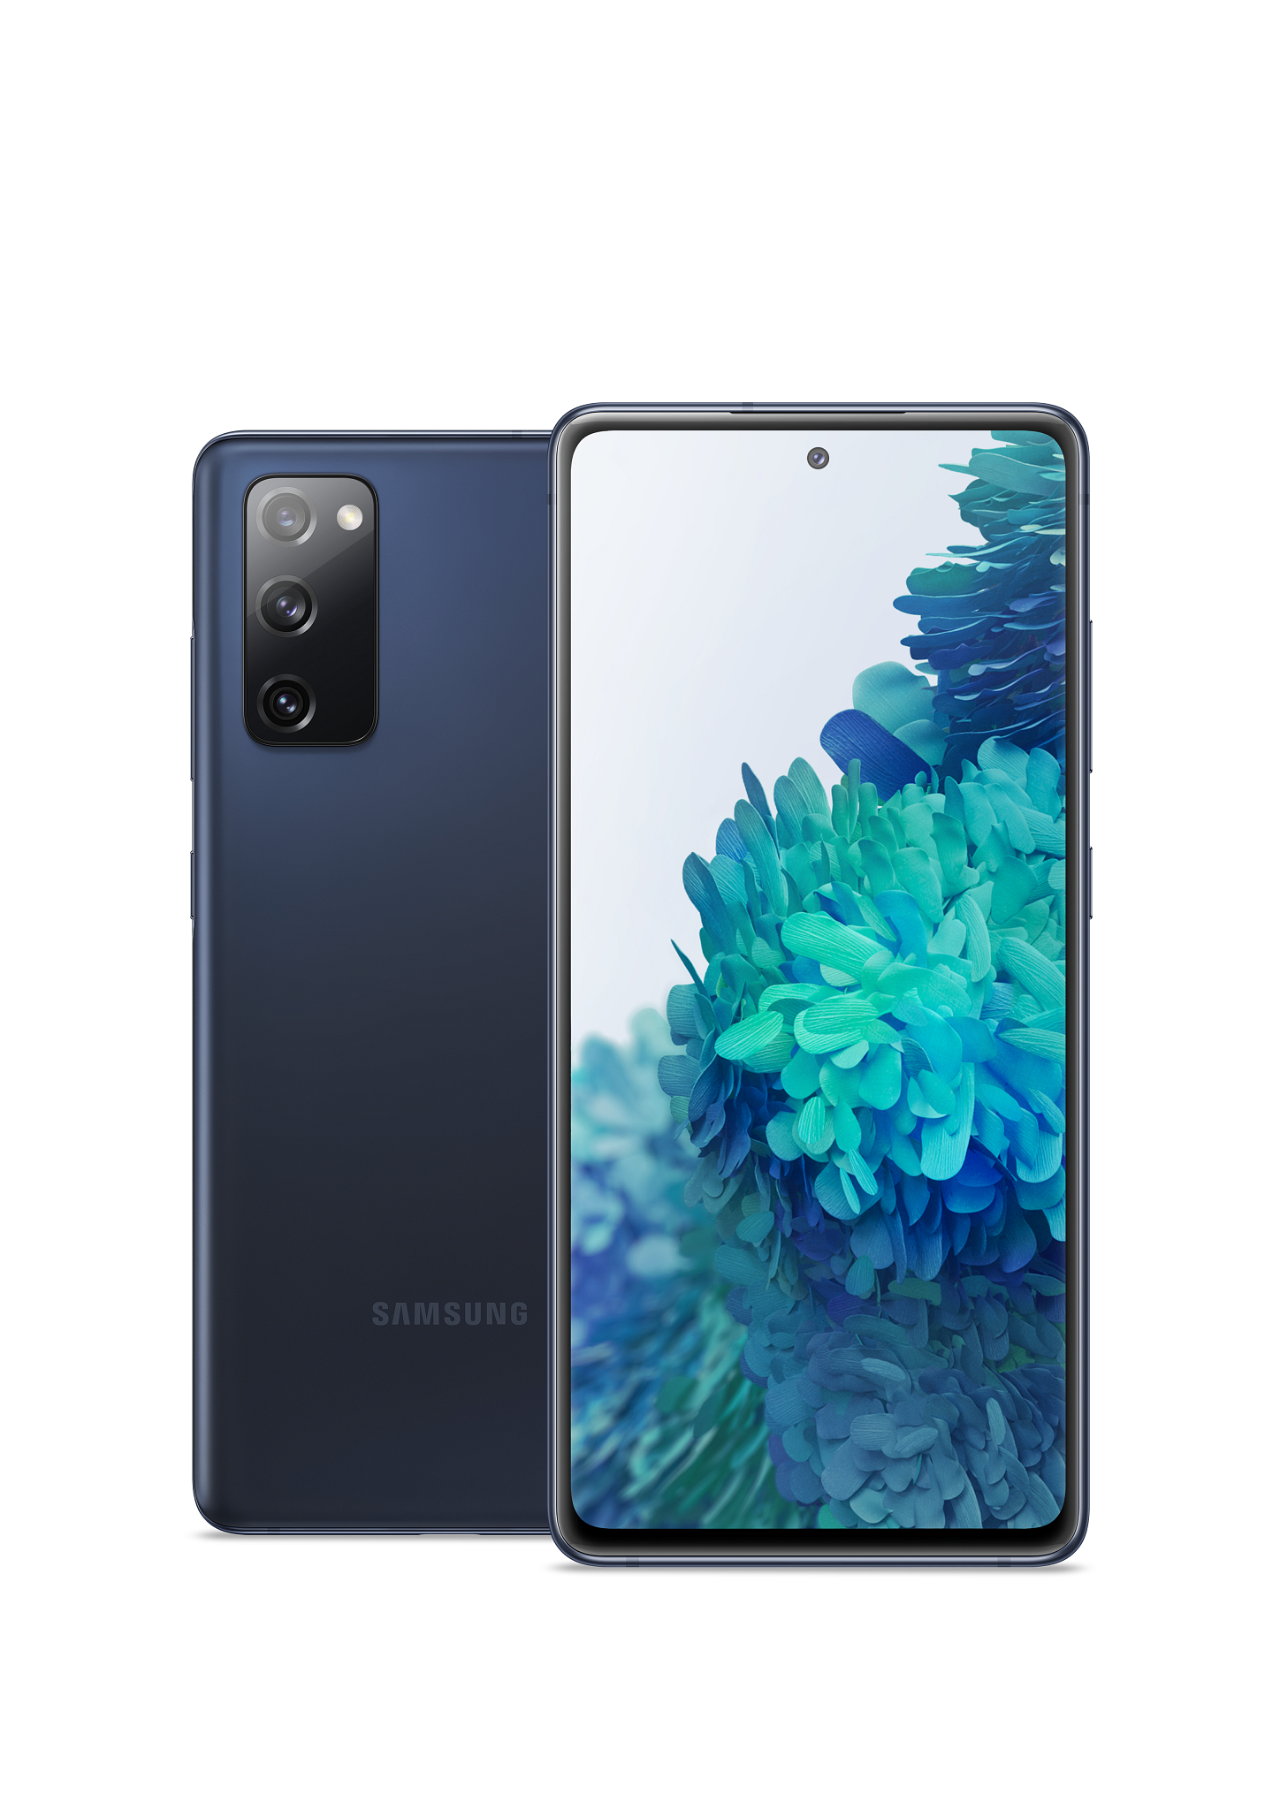 New Samsung Galaxy S20 FE 5G! | T-Mobile Community